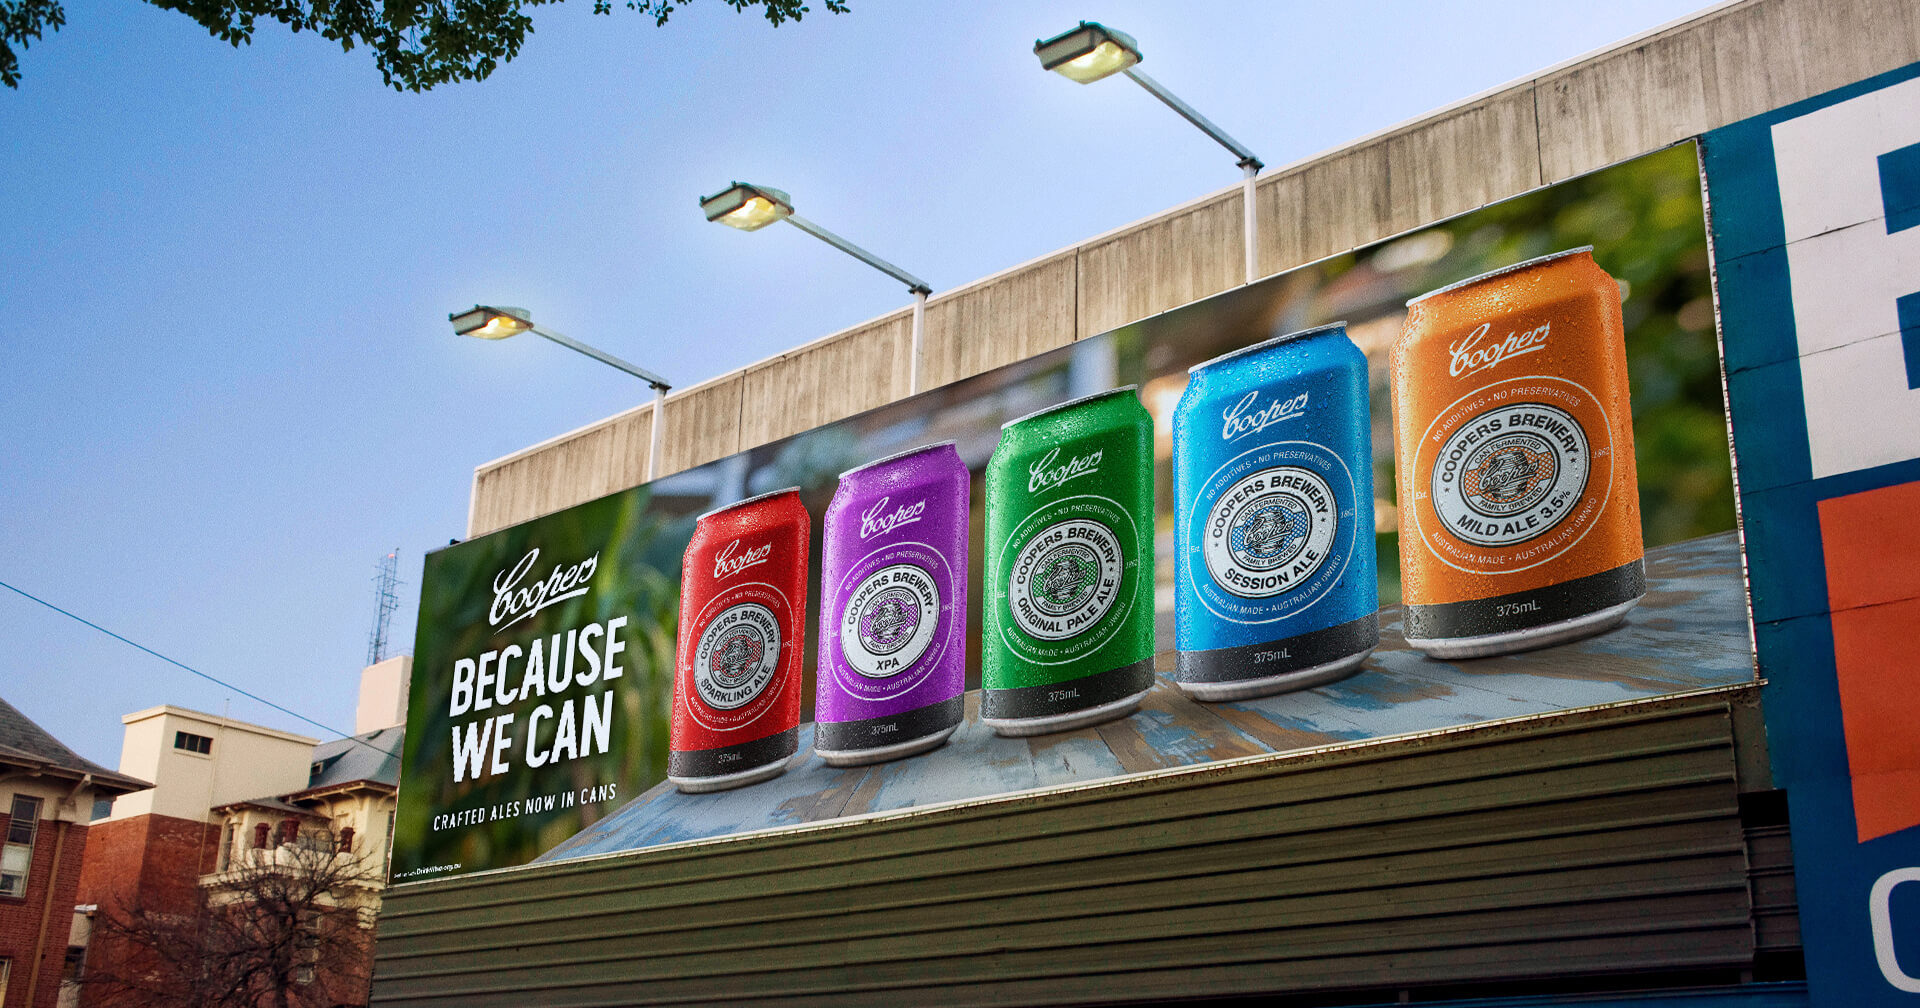 Coopers Brewery - print media billboard advertisement